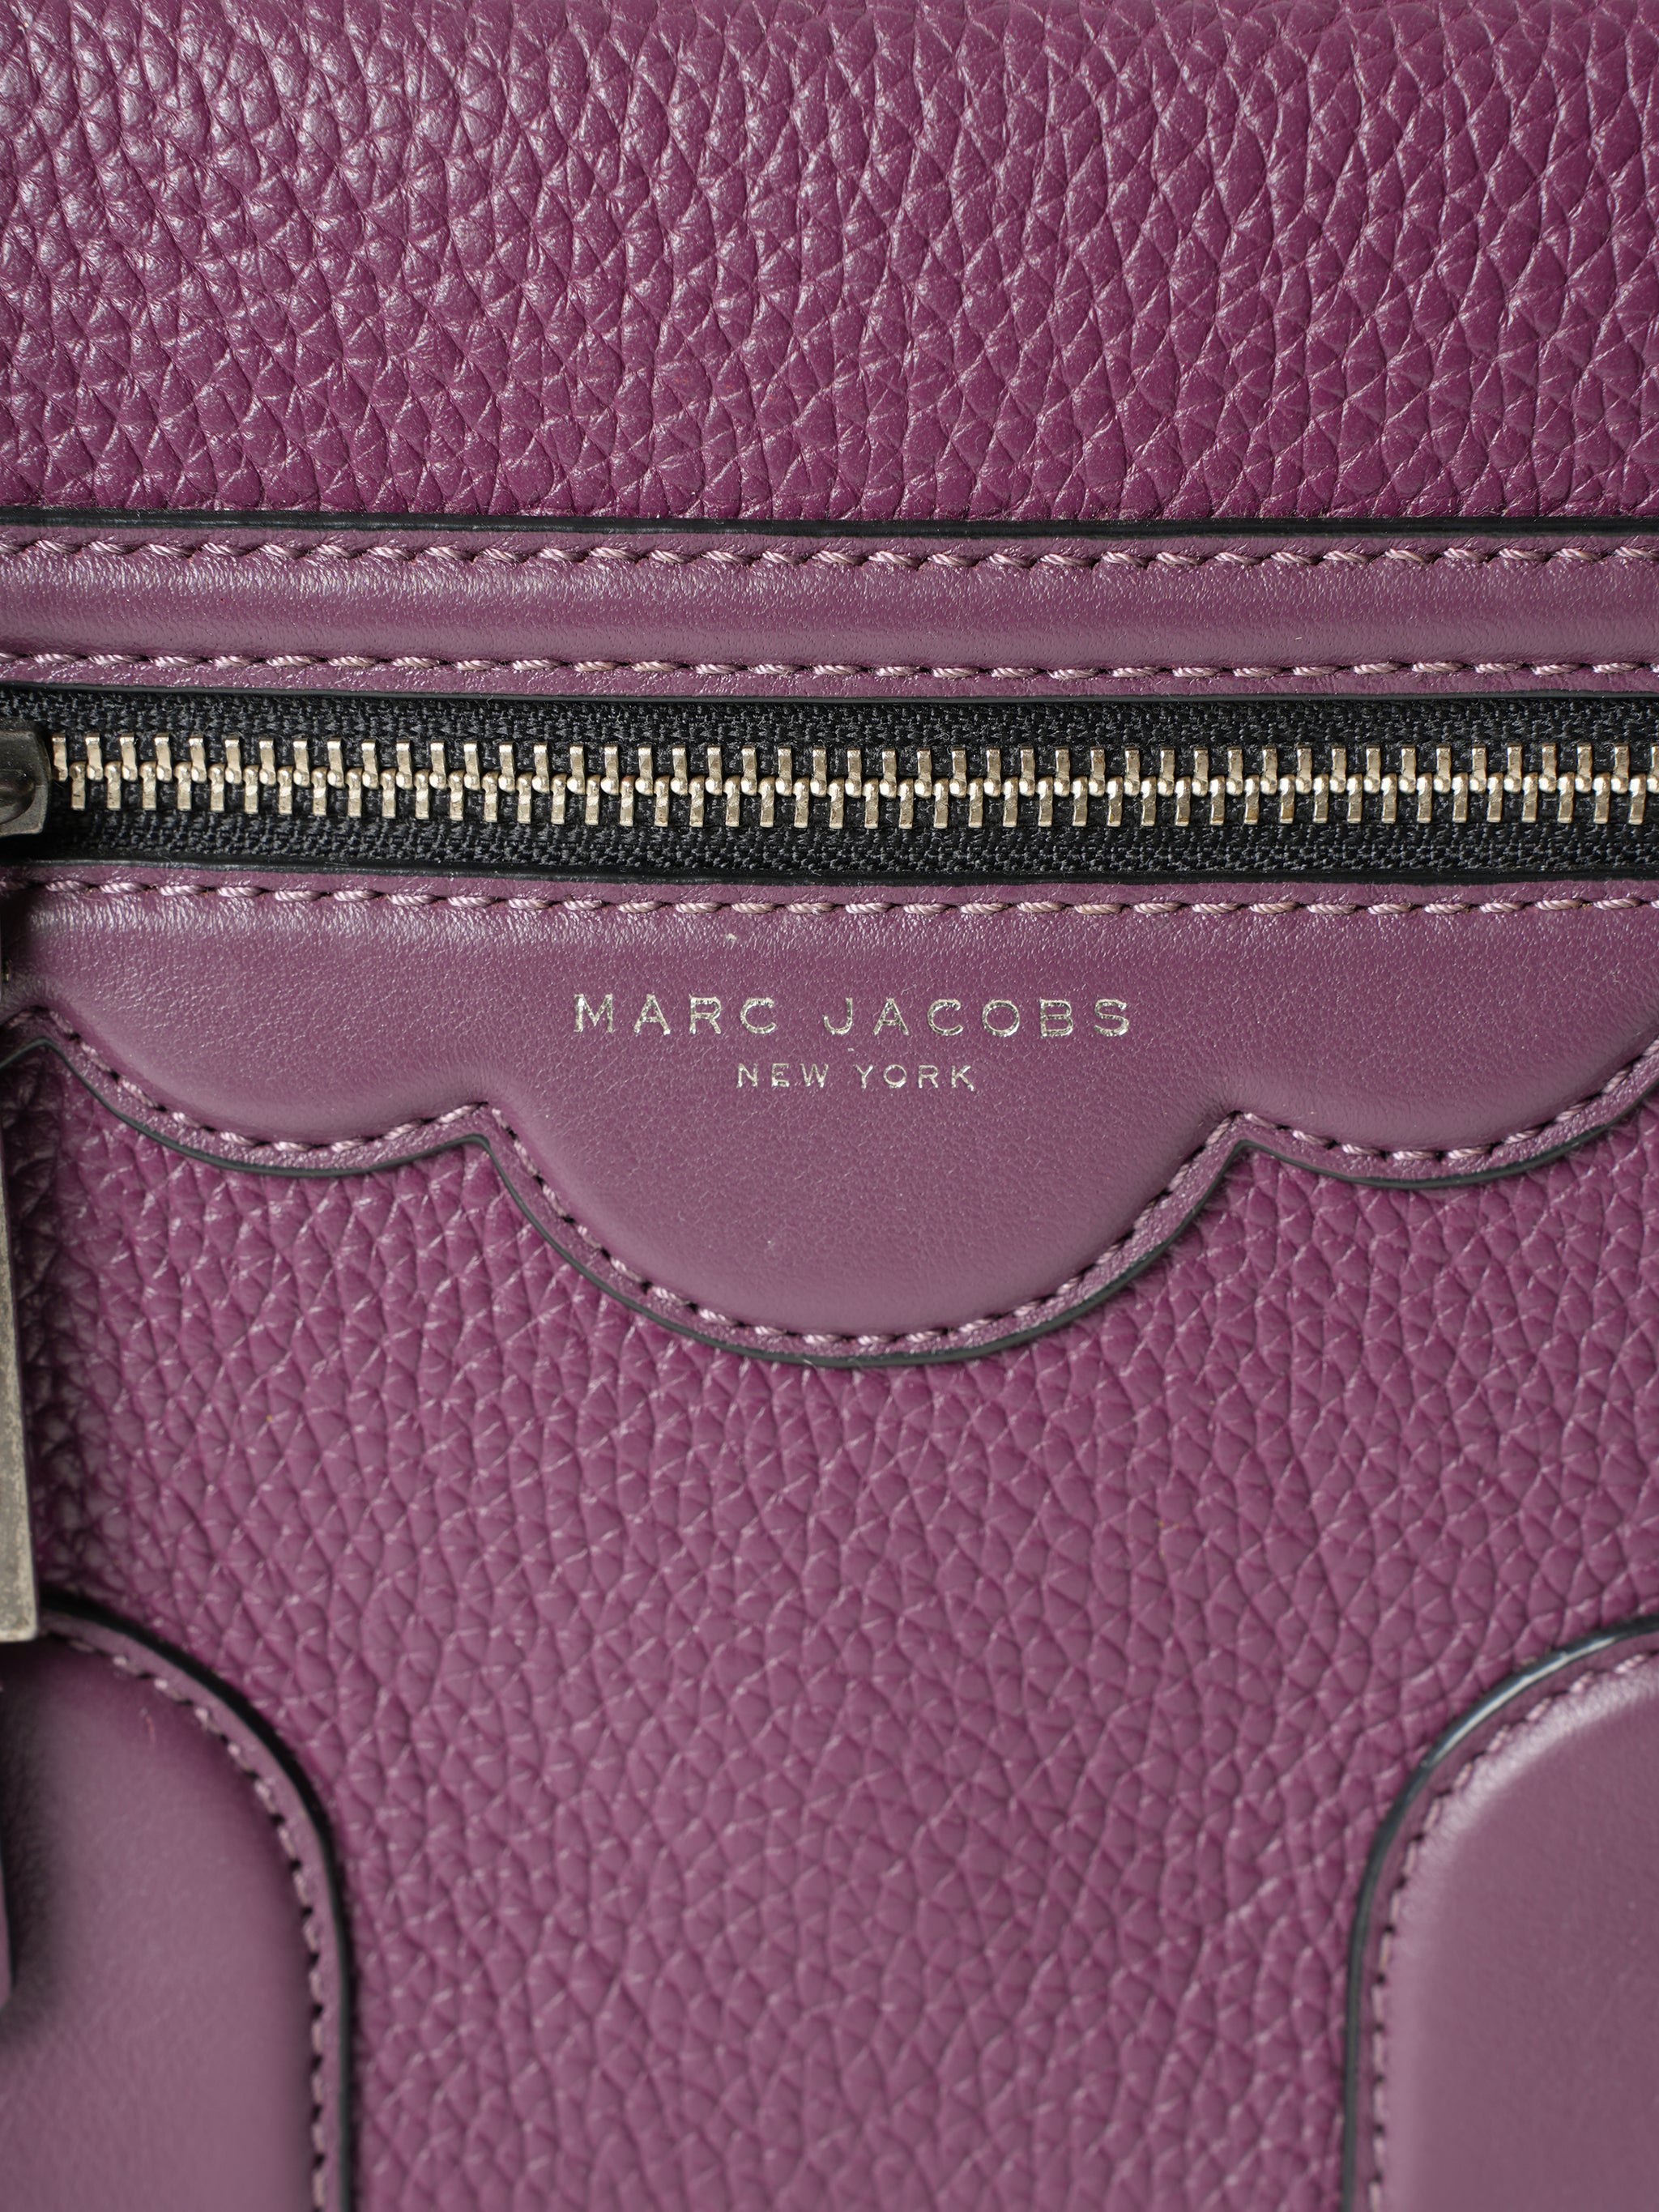 Marc Jacobs Haze Crossbody Purple Bag